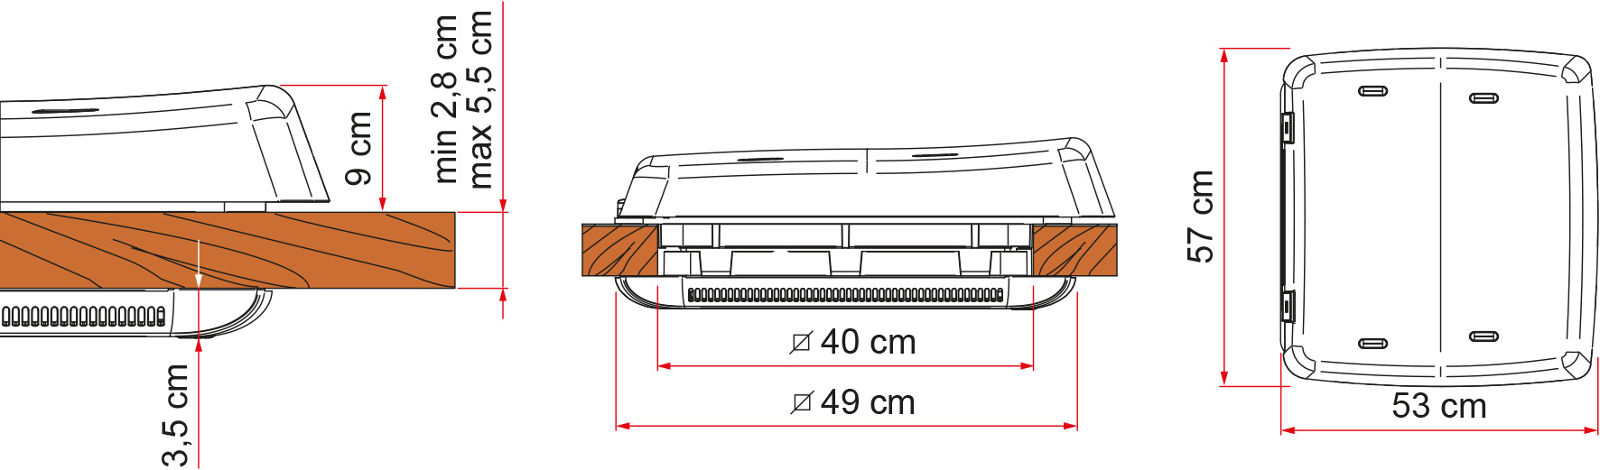 Fiamma Vent F Pro dimensions for 40cm square cut out hole